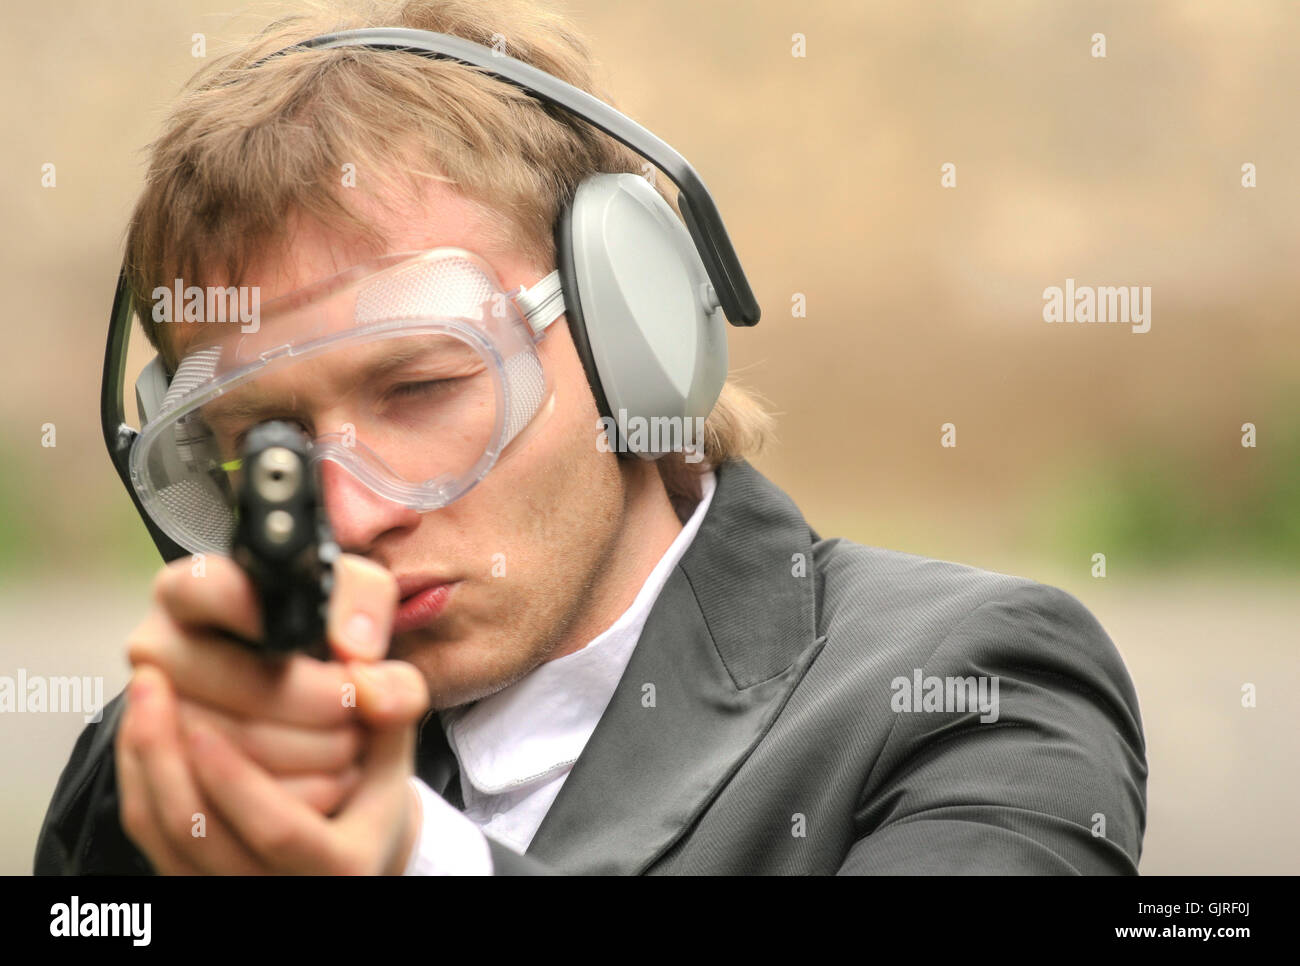 shooting gun firearm Stock Photo